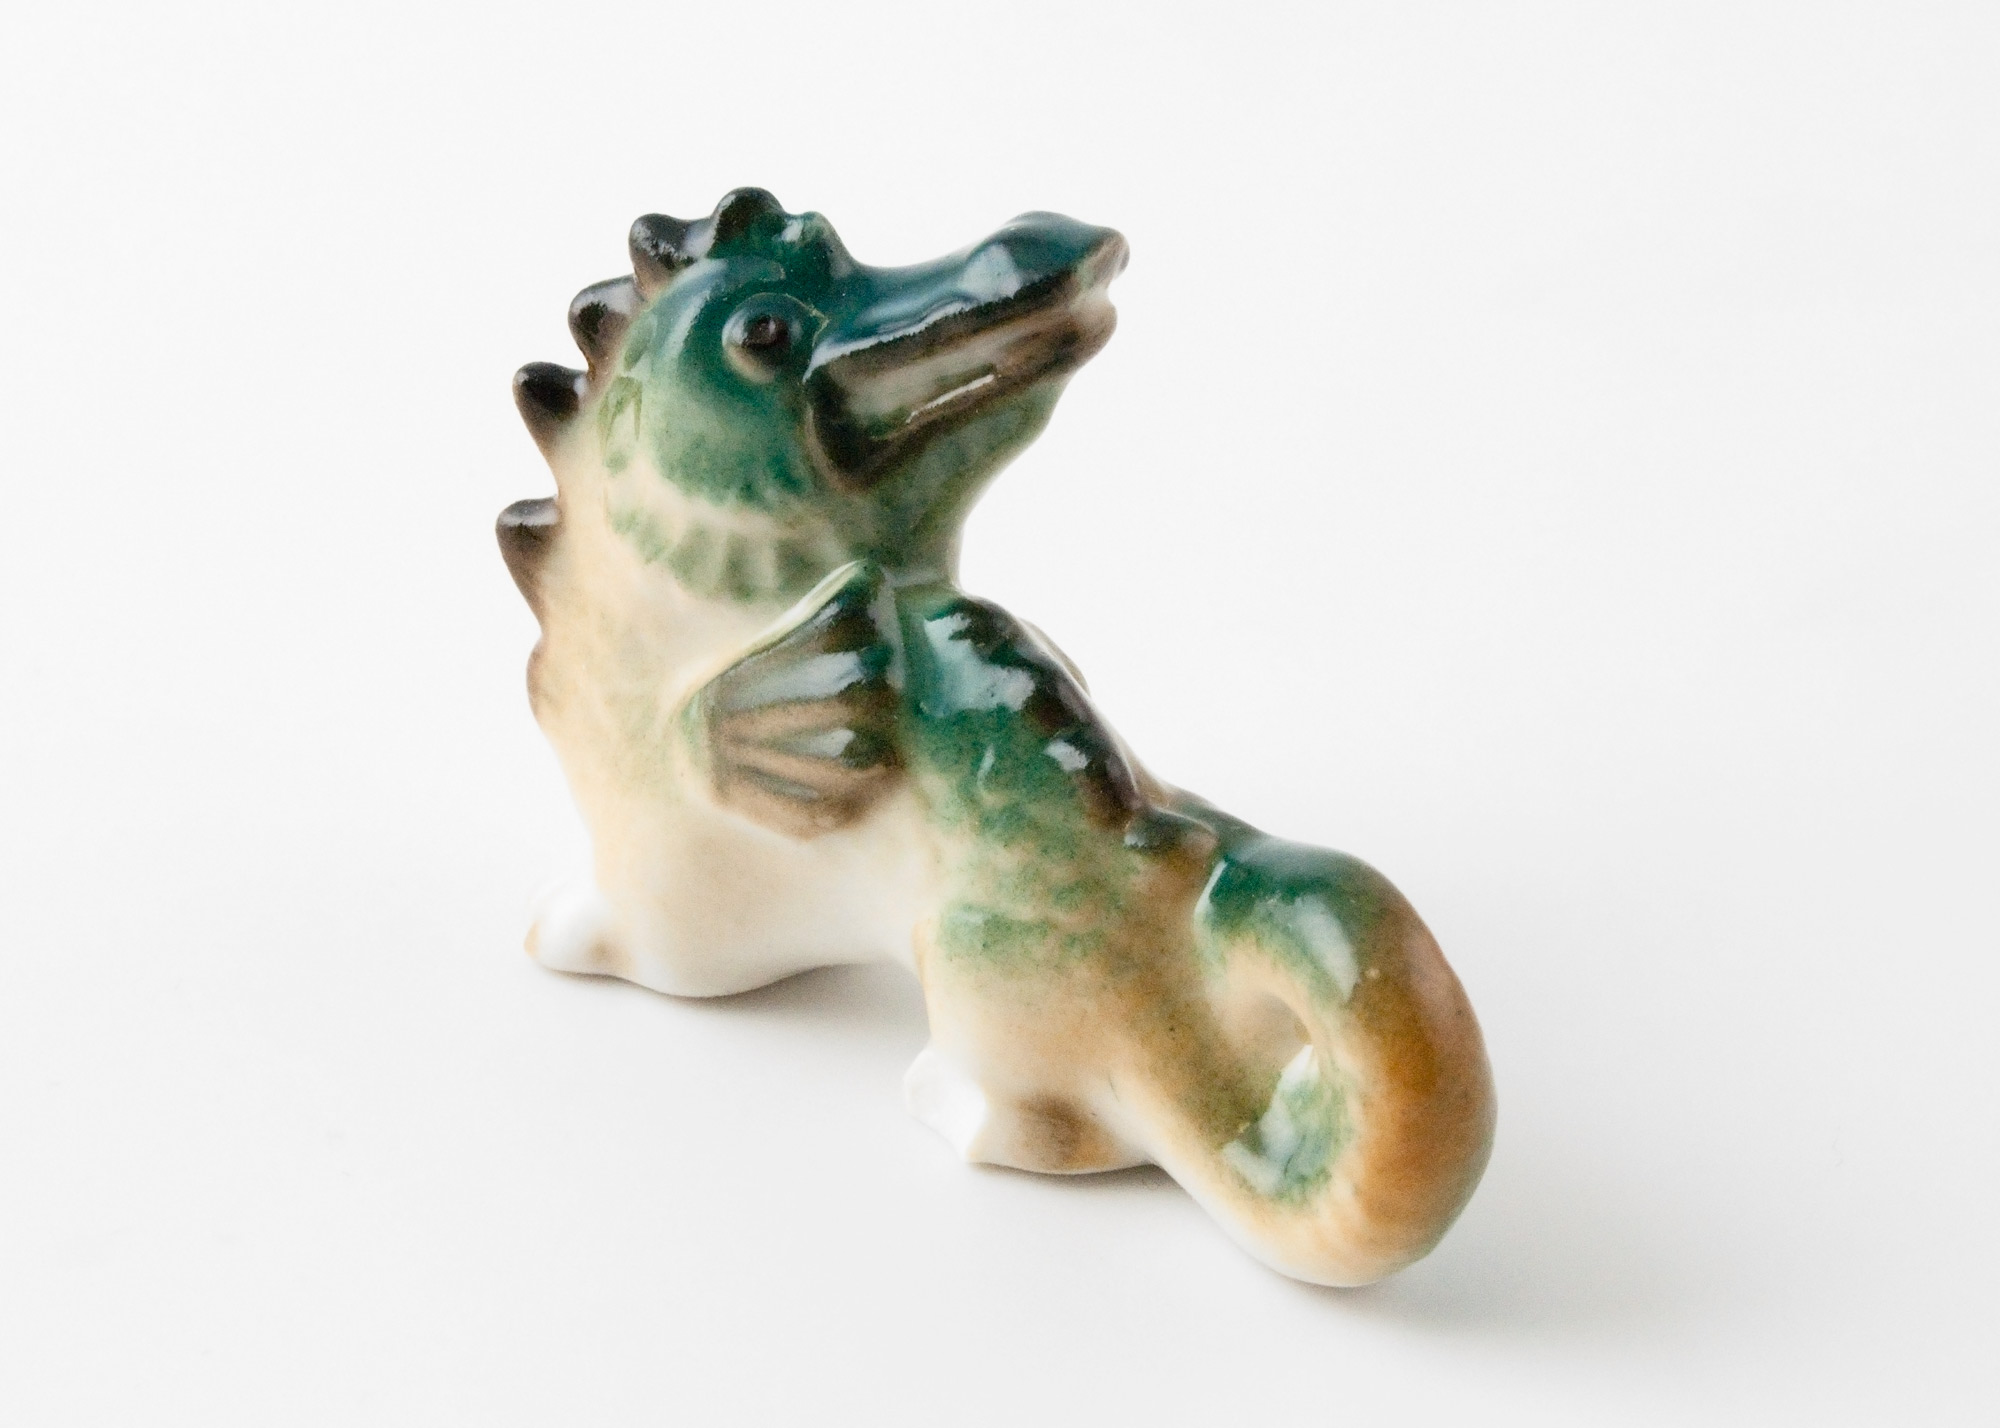 Buy Small Dragon Figurine at GoldenCockerel.com